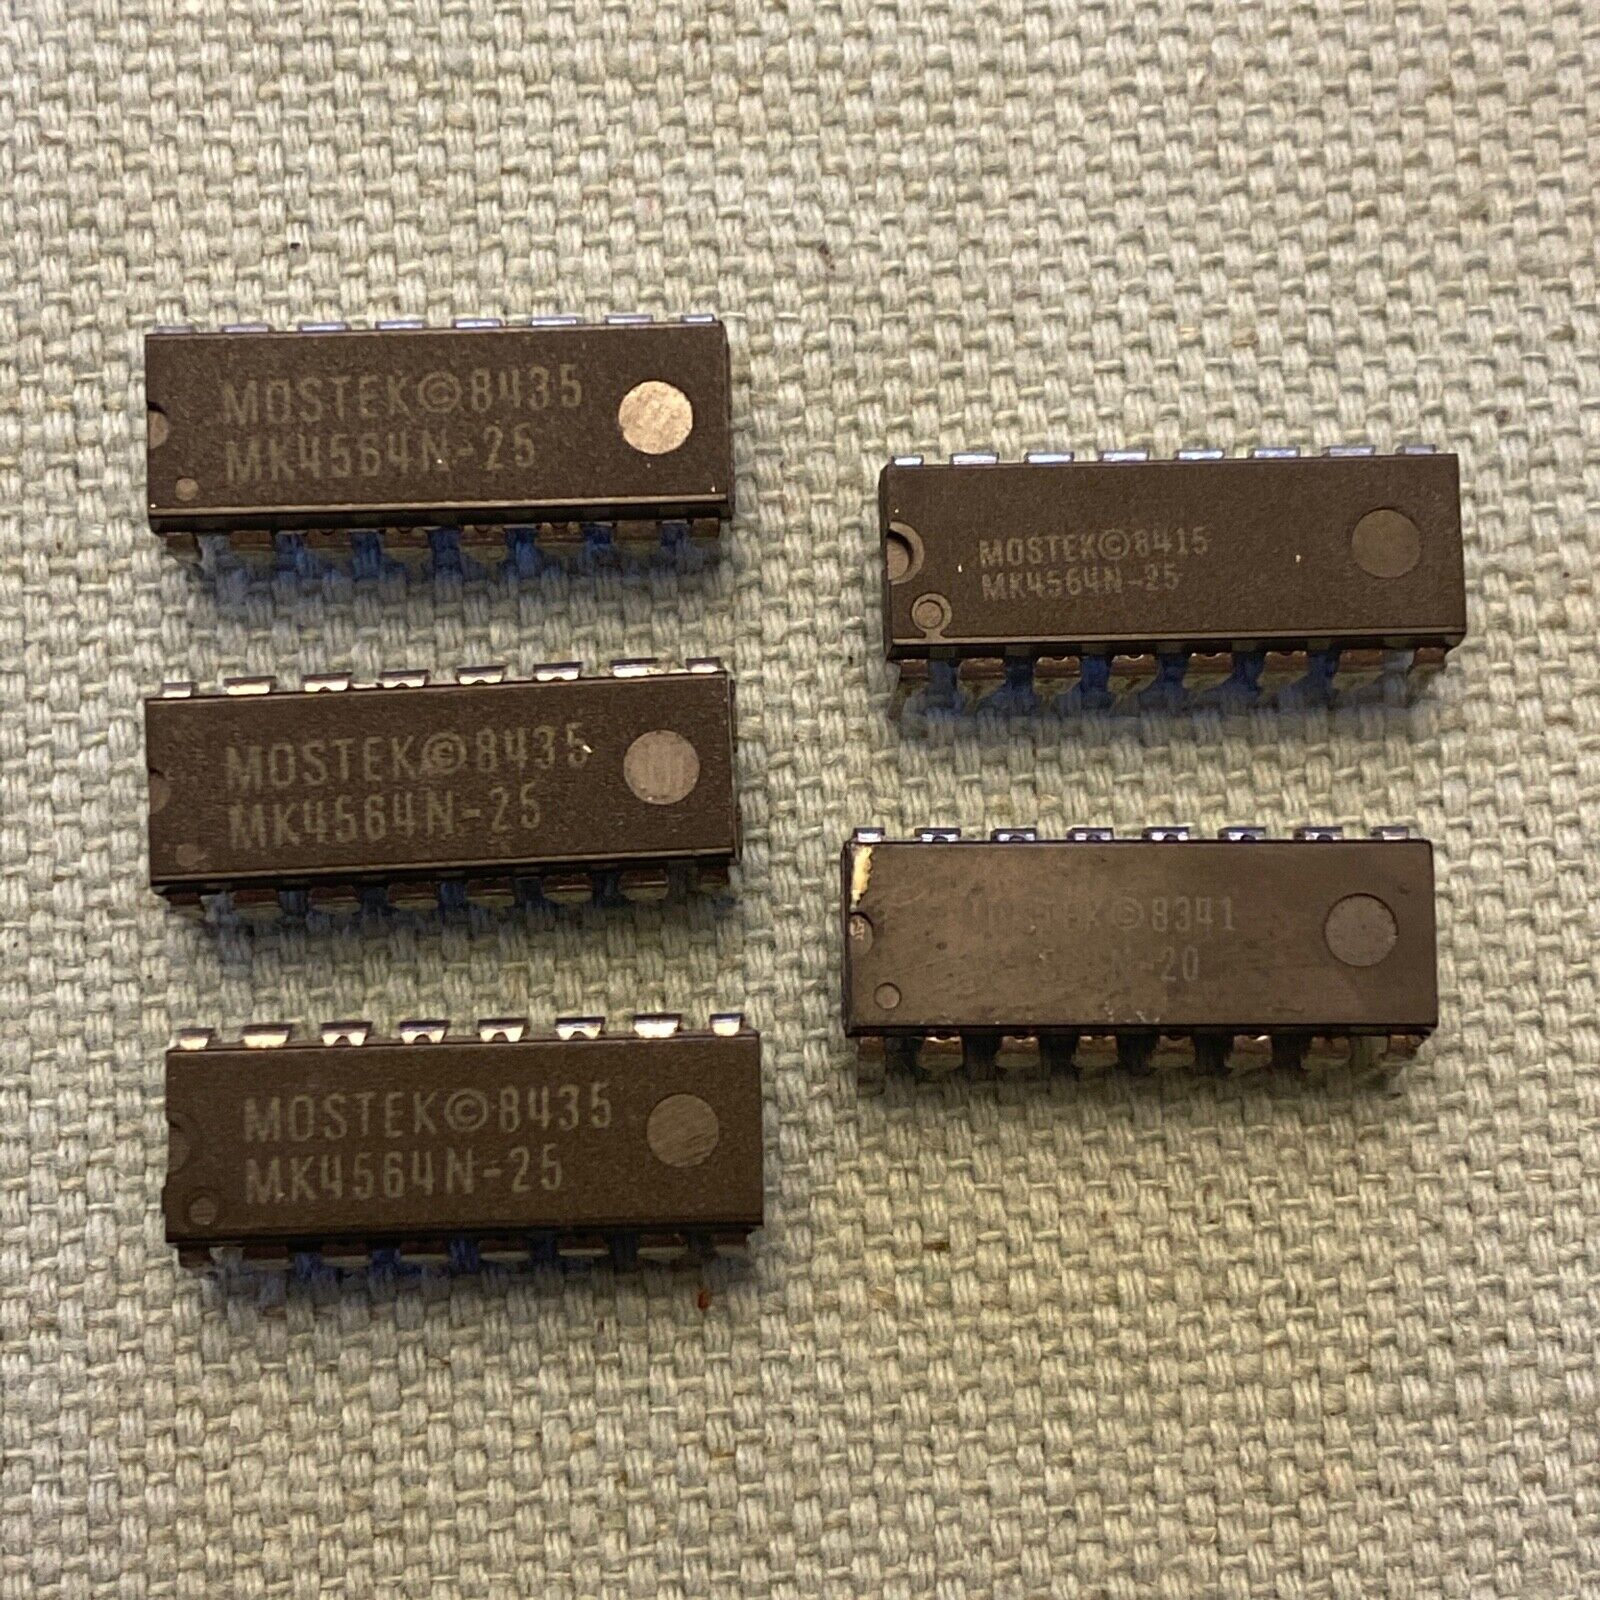 Mostek MK4564N-25 MK4564N-20 DRAM 16 Pin DIP Lot 5 Vintage Computer IC Chip